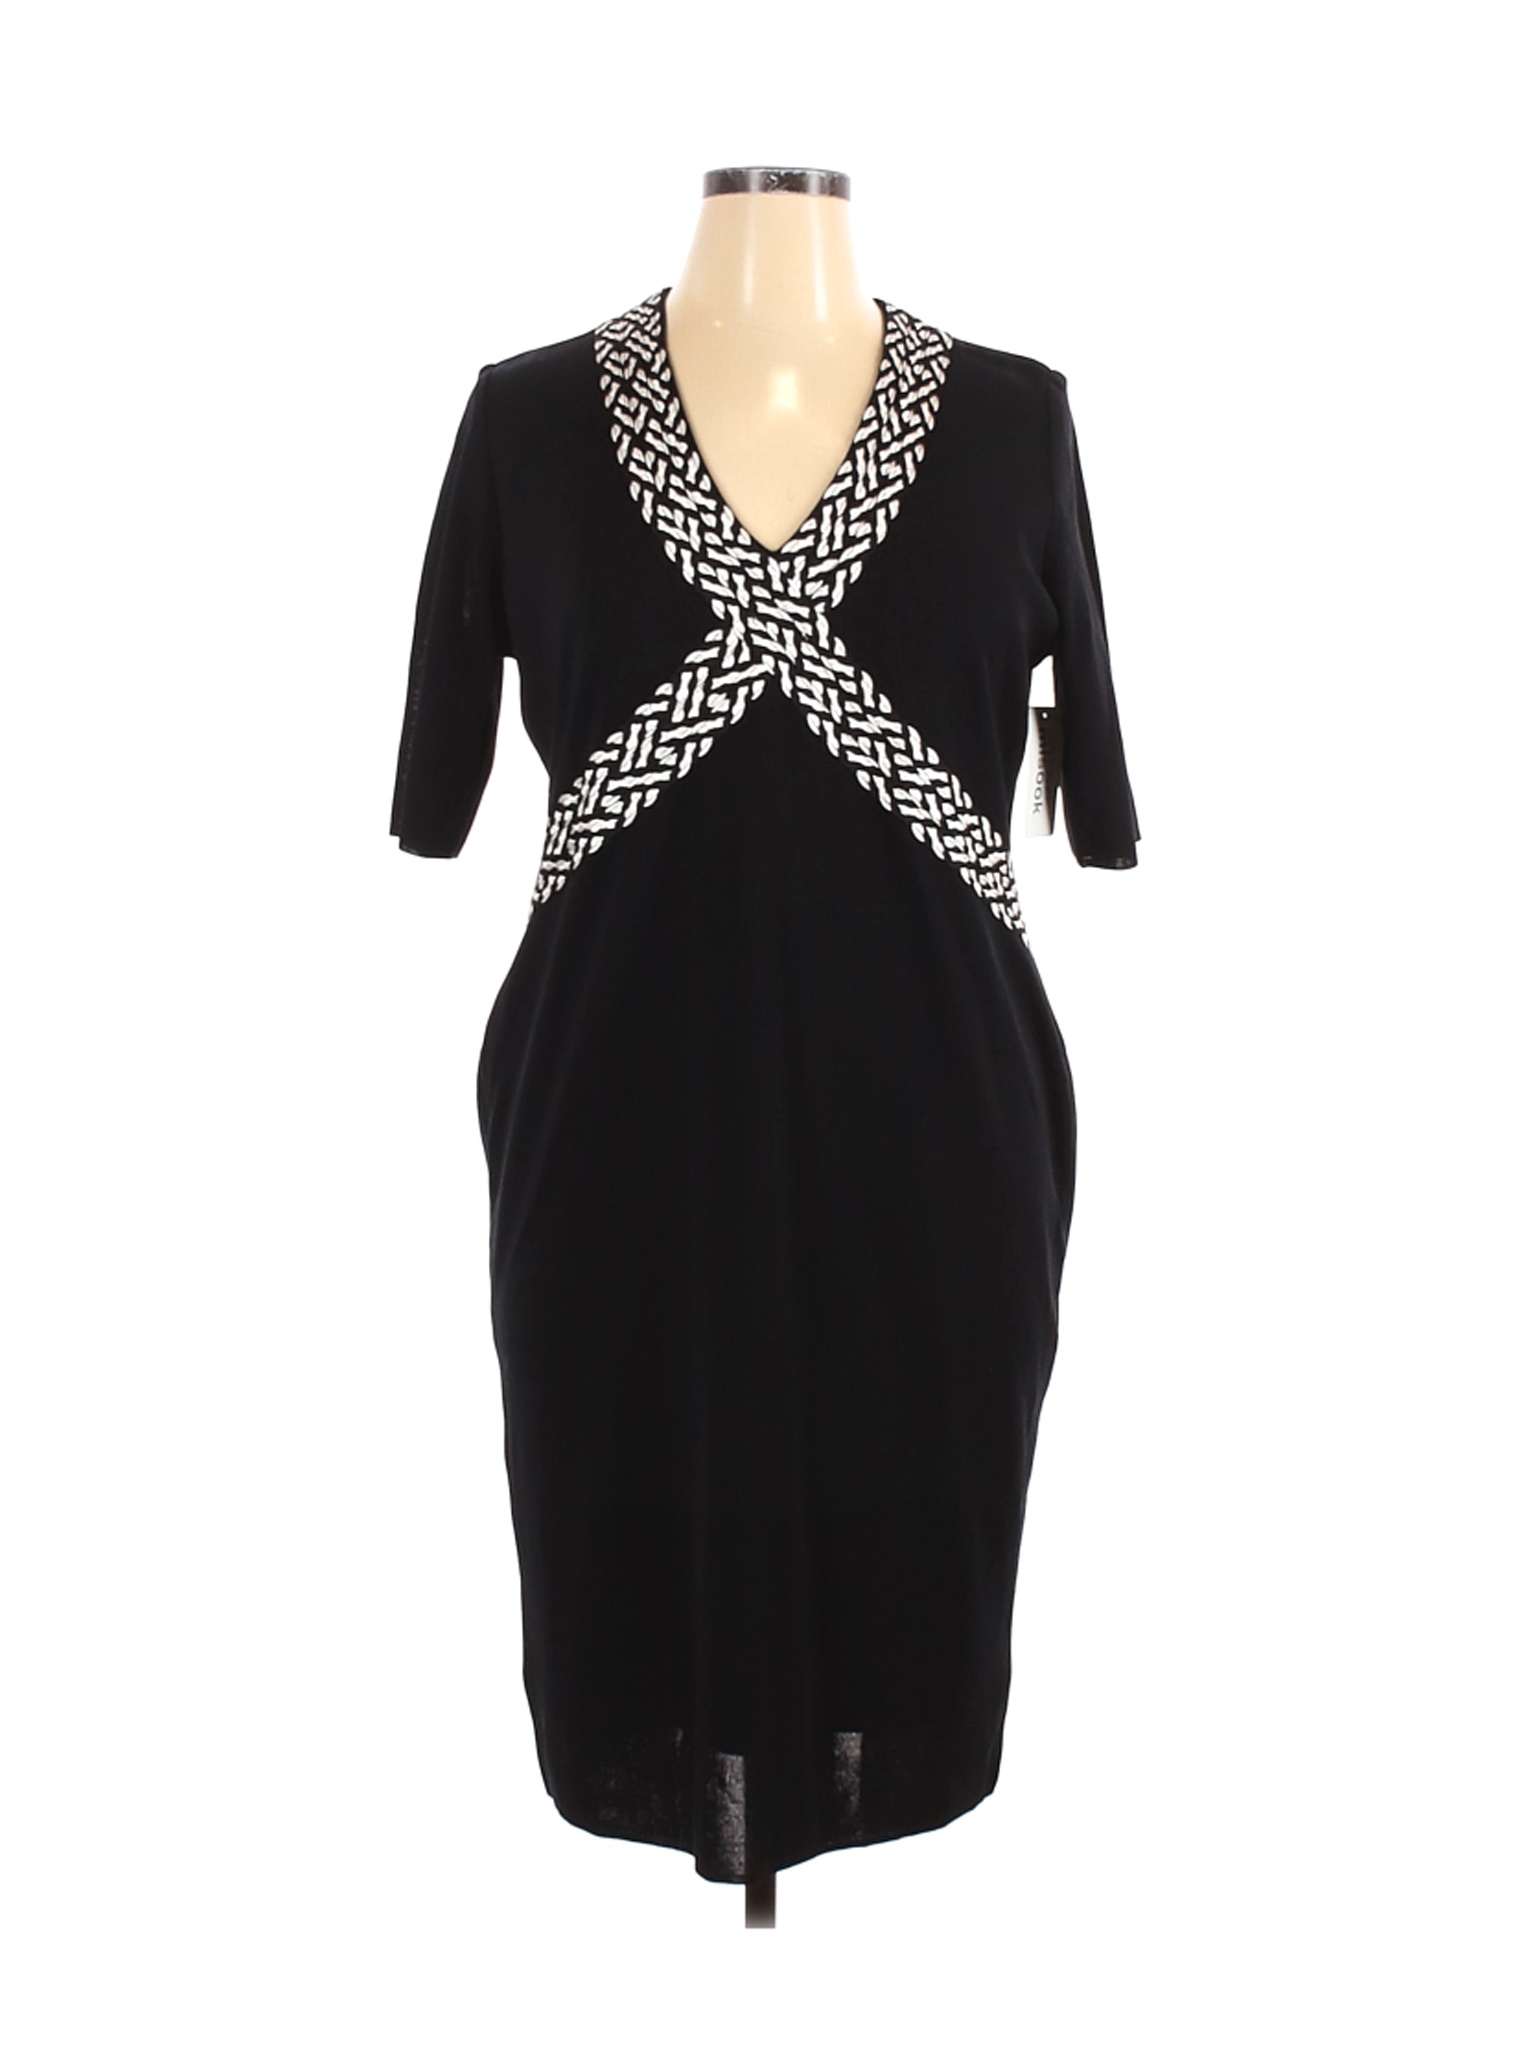 misook Solid Black Casual Dress Size 1X (Plus) - 55% off | thredUP